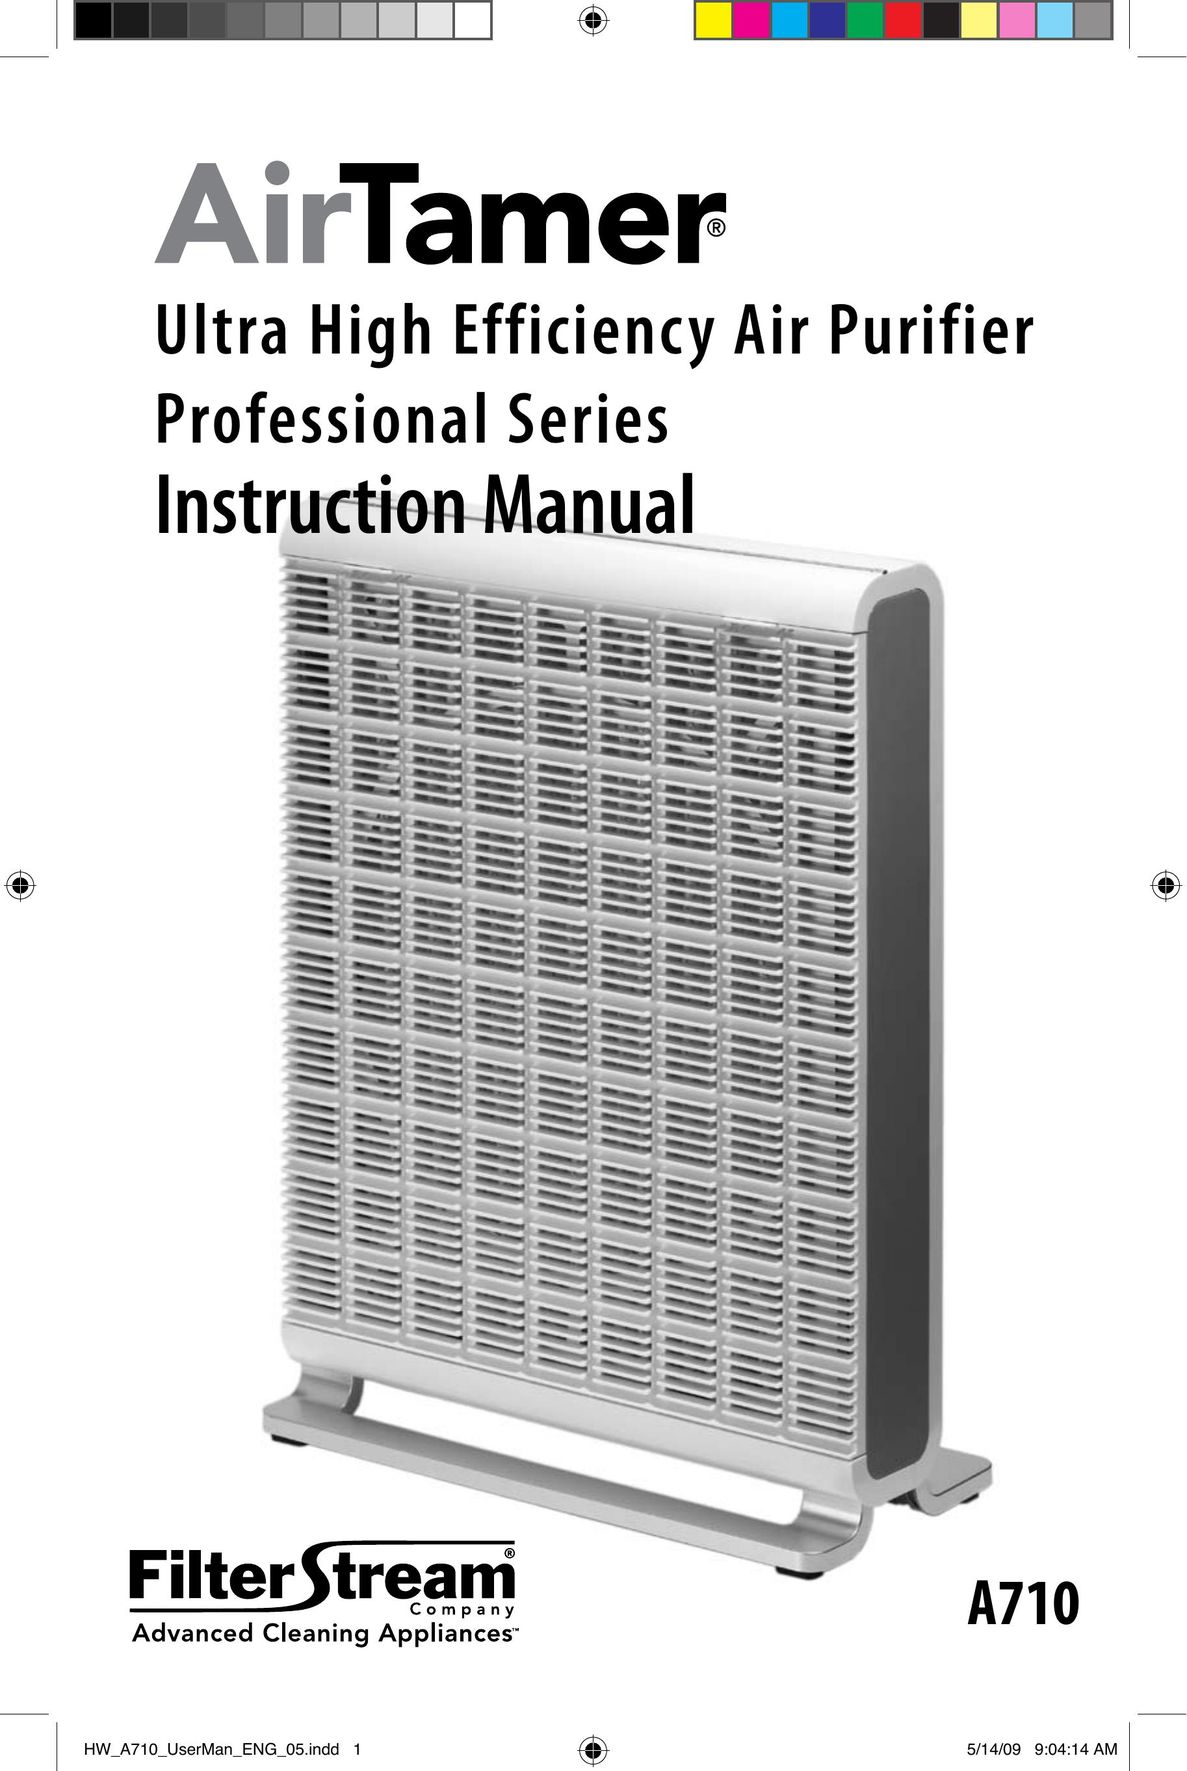 FilterStream HW_A710 Air Cleaner User Manual